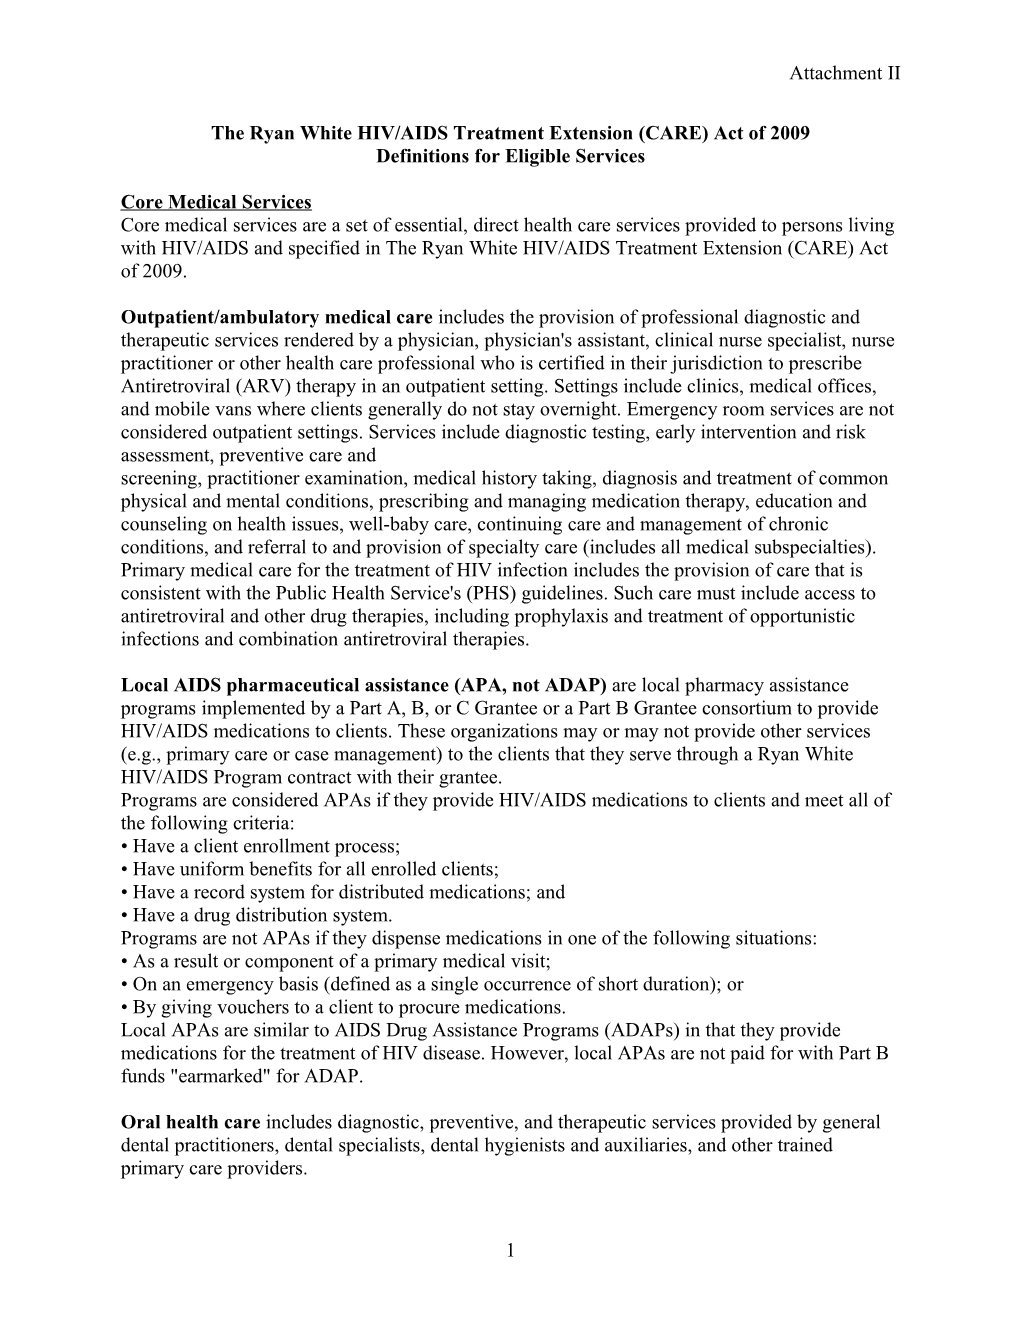 Ryan White HIV/AIDS Treatment Modernization Act of 2006